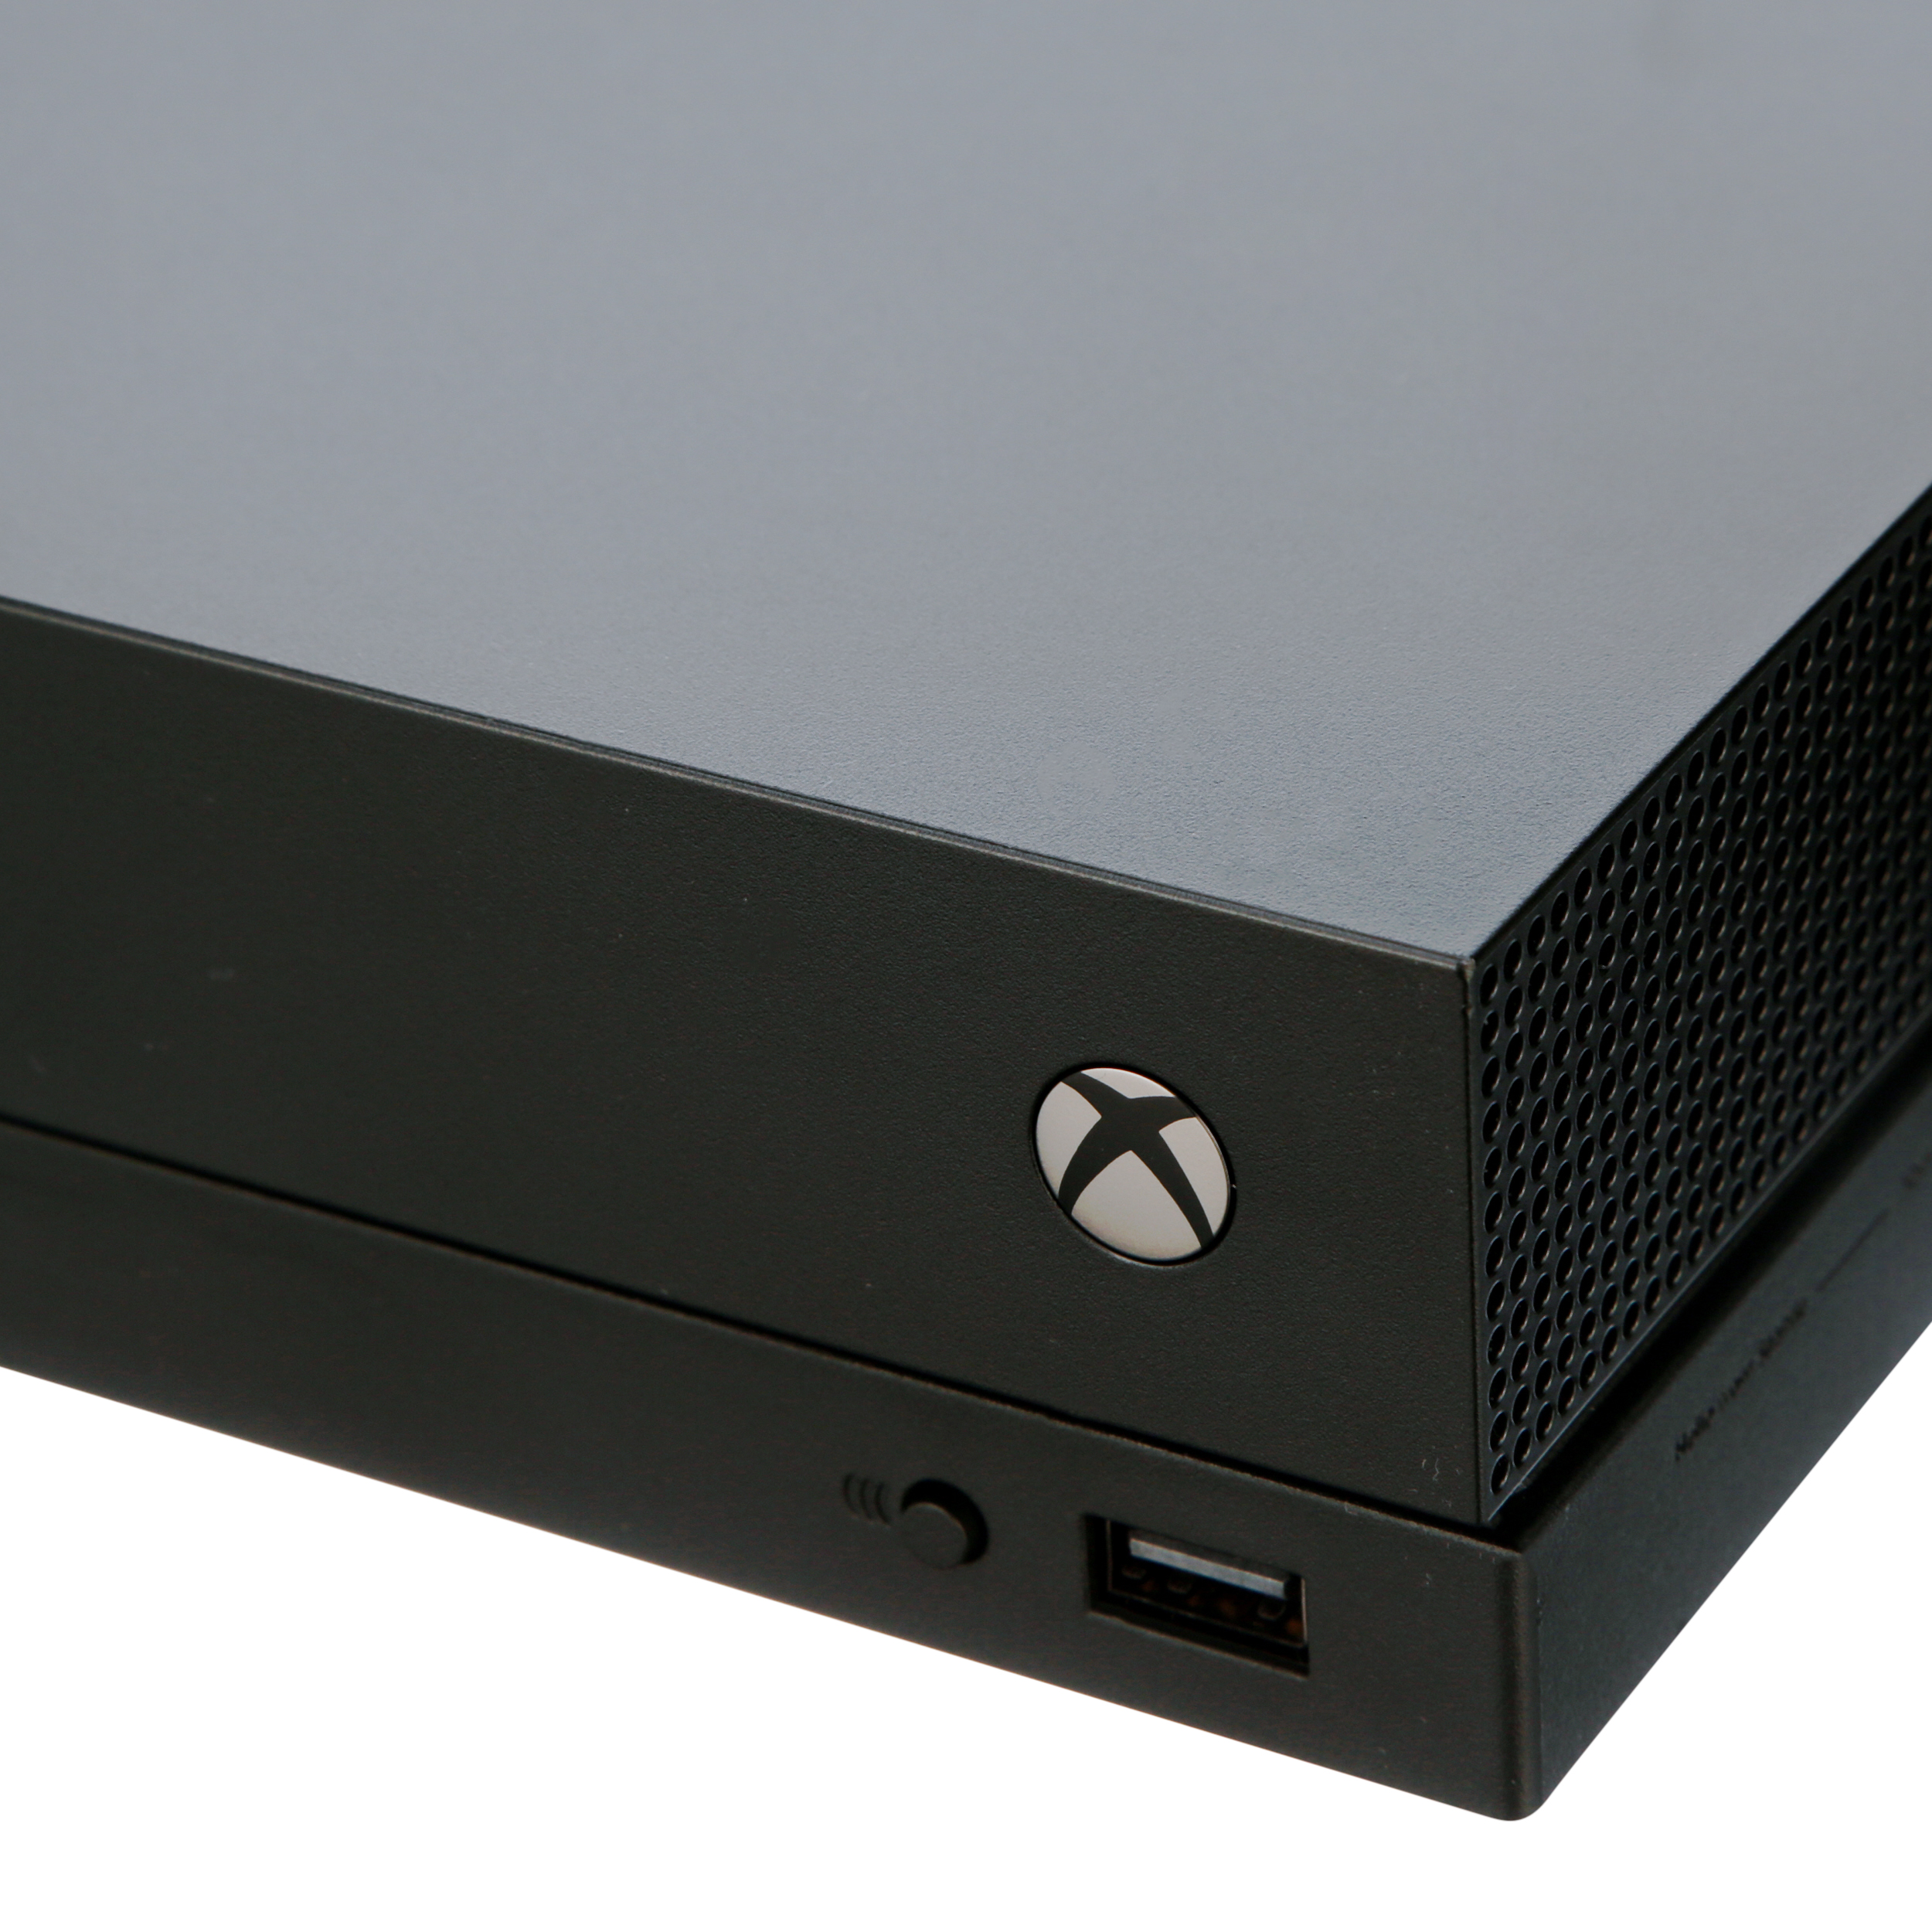 Restored Microsoft Xbox One X 1TB, 4K Ultra HD Gaming Console in Black, FMQ-00042, 889842246971 (Refurbished) - image 5 of 9